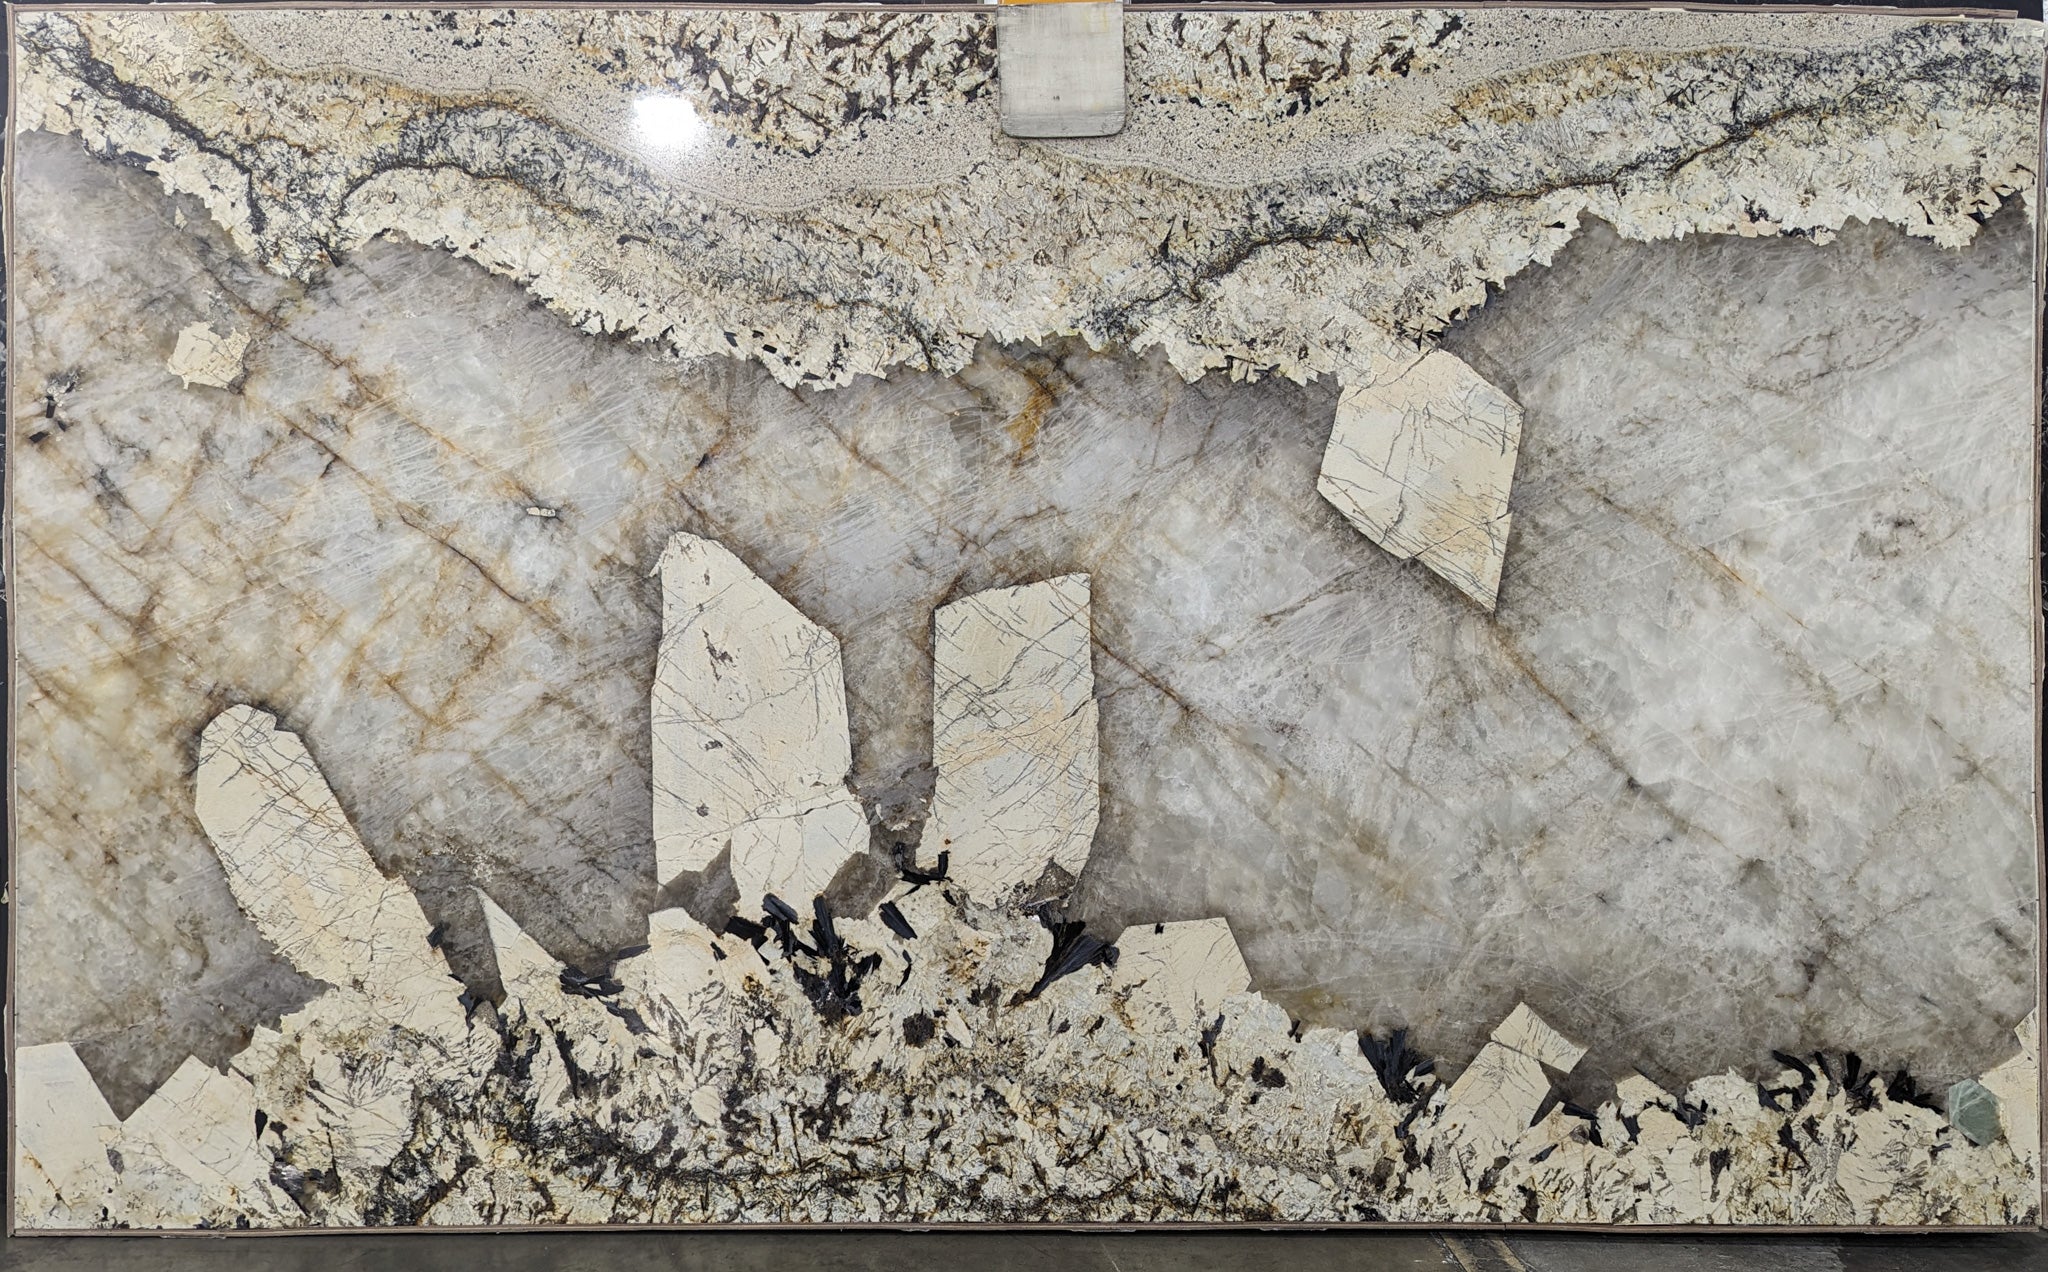  Patagonia Extra Granite Slab 3/4 - 34581#31 -  79x132 